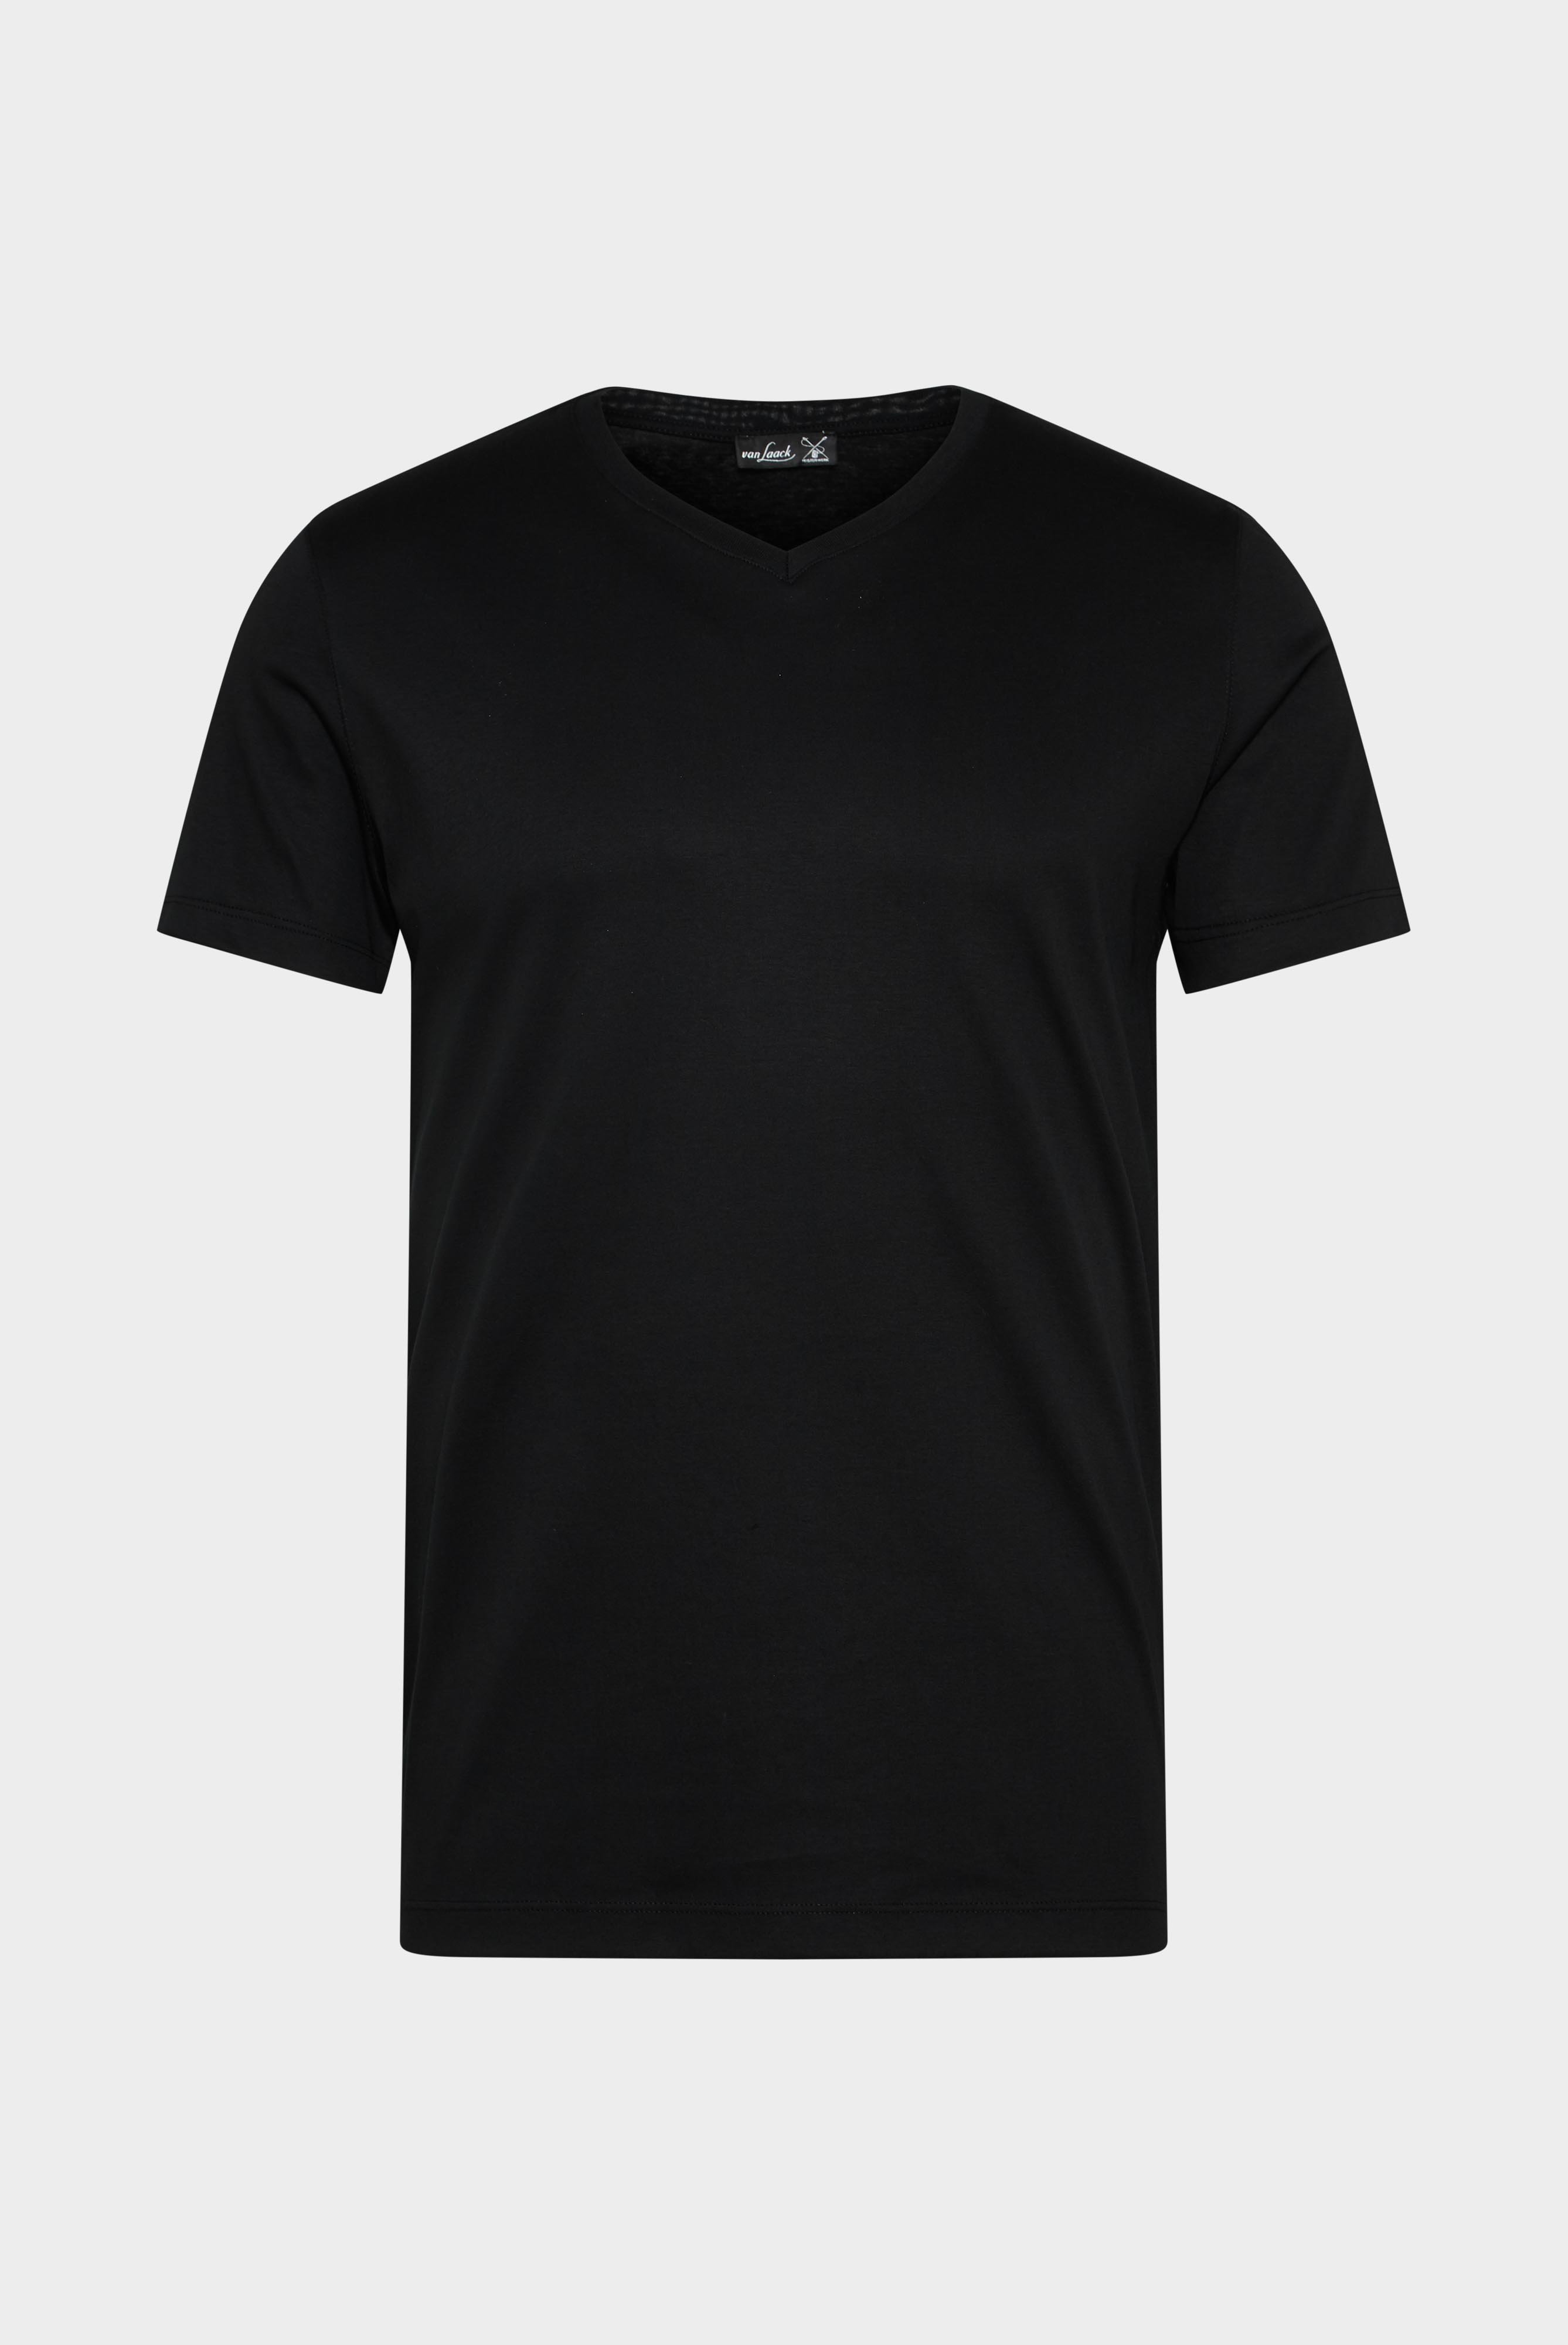 T-Shirts+Swiss Cotton Jersey V-Neck T-Shirt+20.1715.UX.180031.099.M